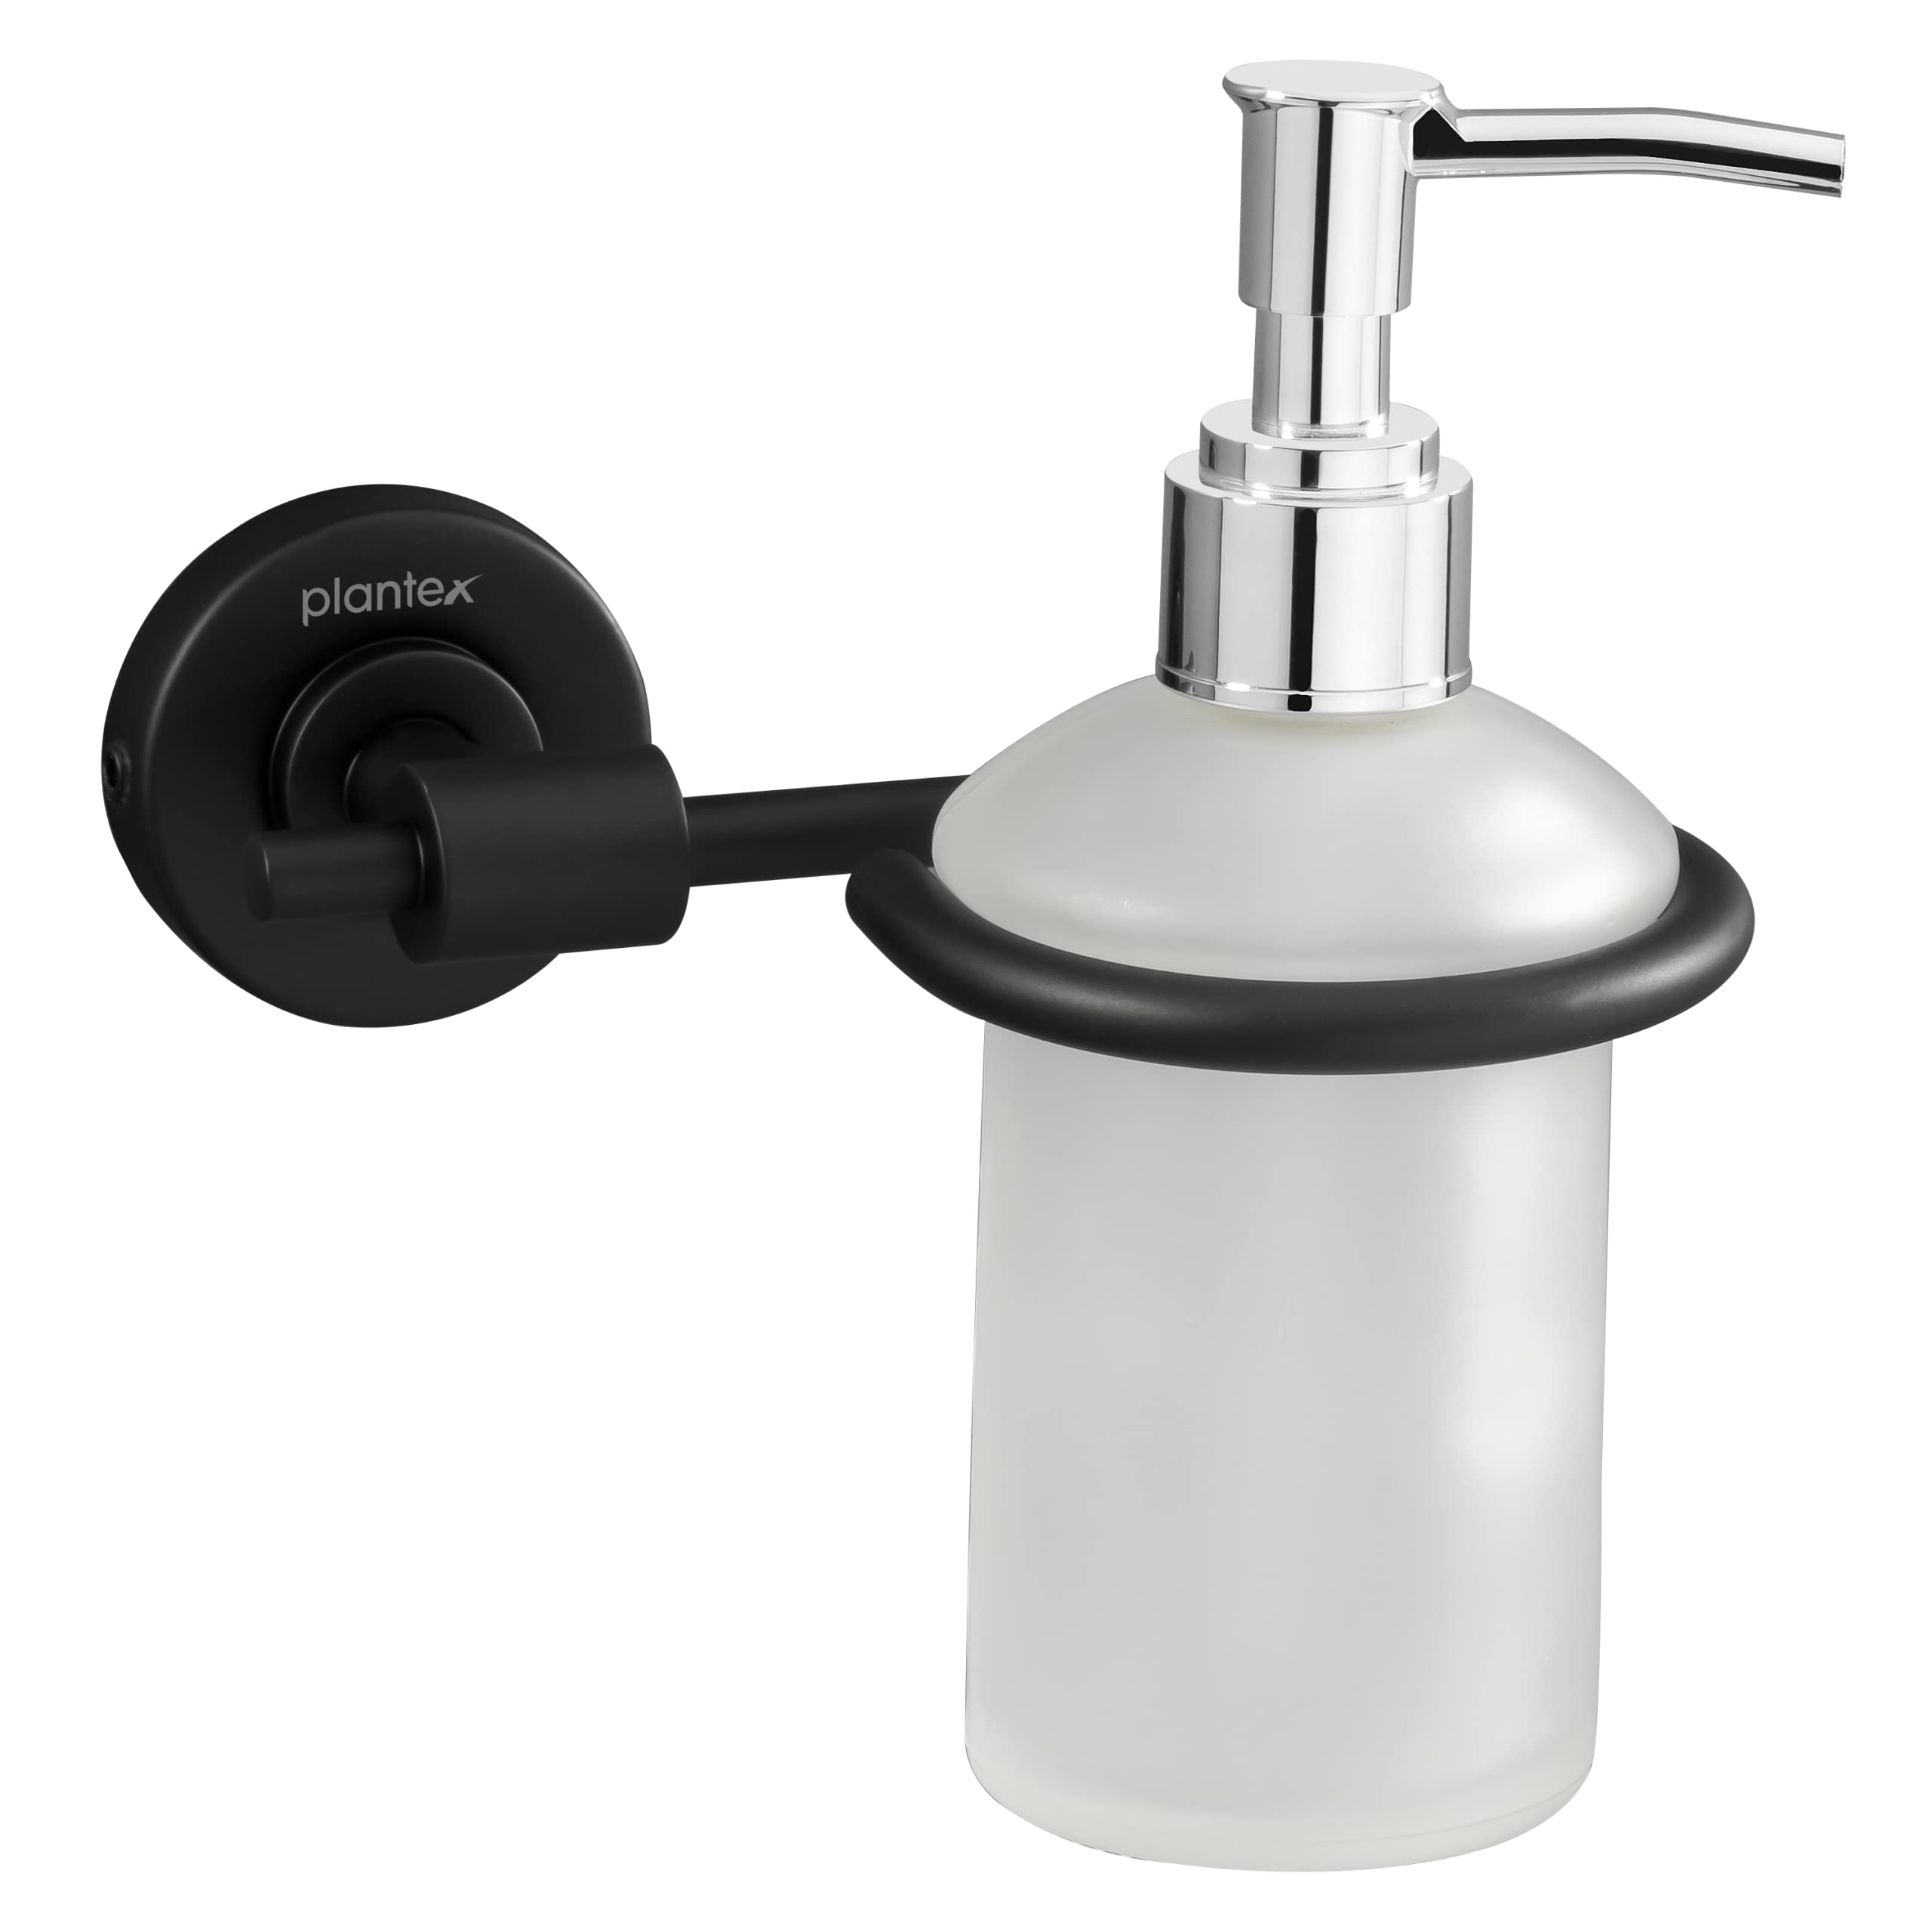 Plantex Daizy Black Hand wash Holder for wash Basin Liquid soap Dispenser - 304 Stainless Steel